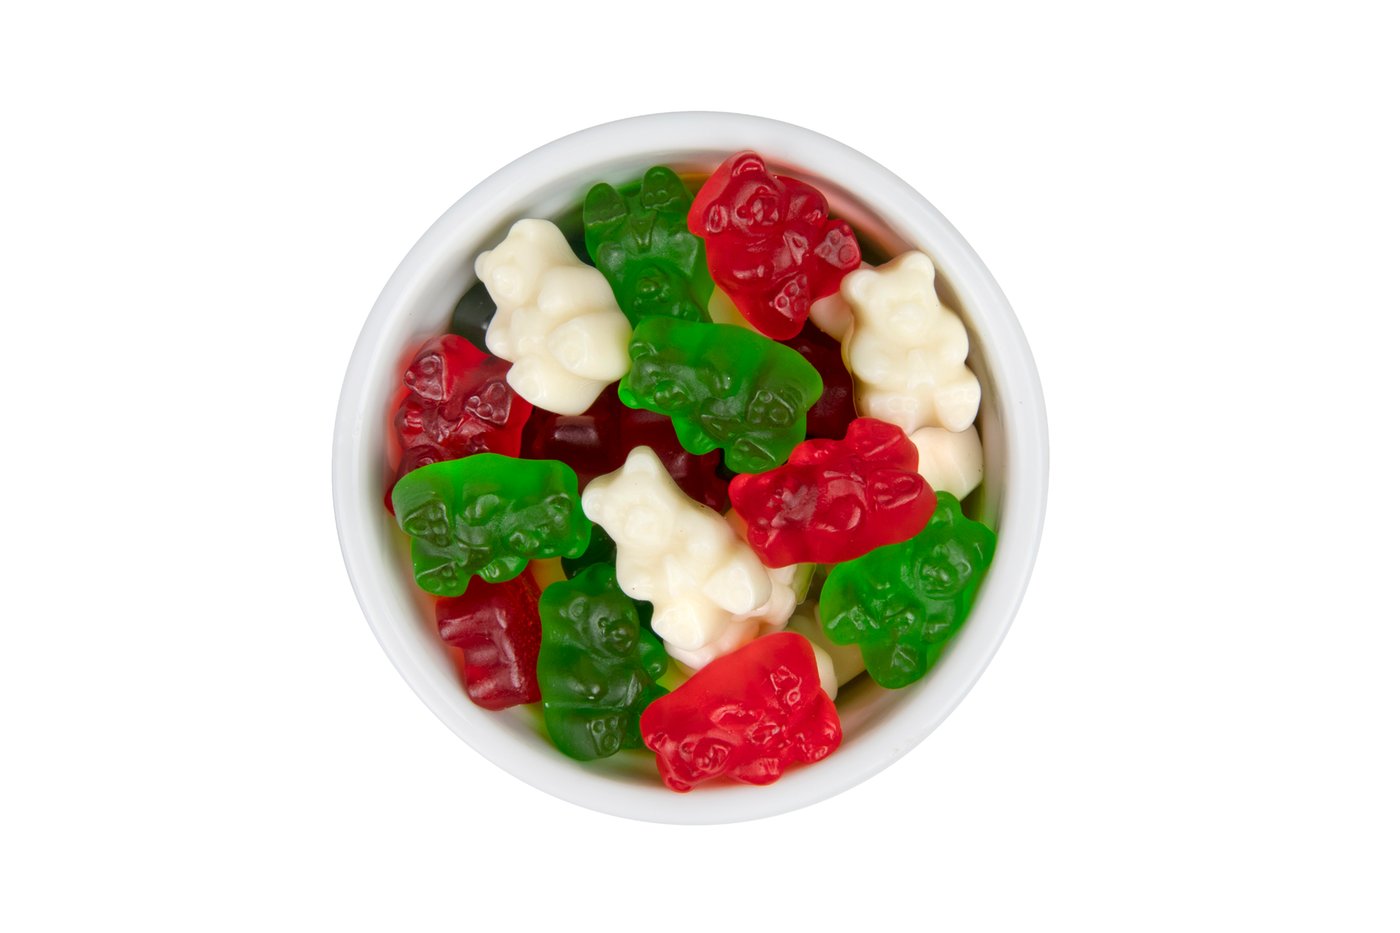 Christmas Gummy Bears photo